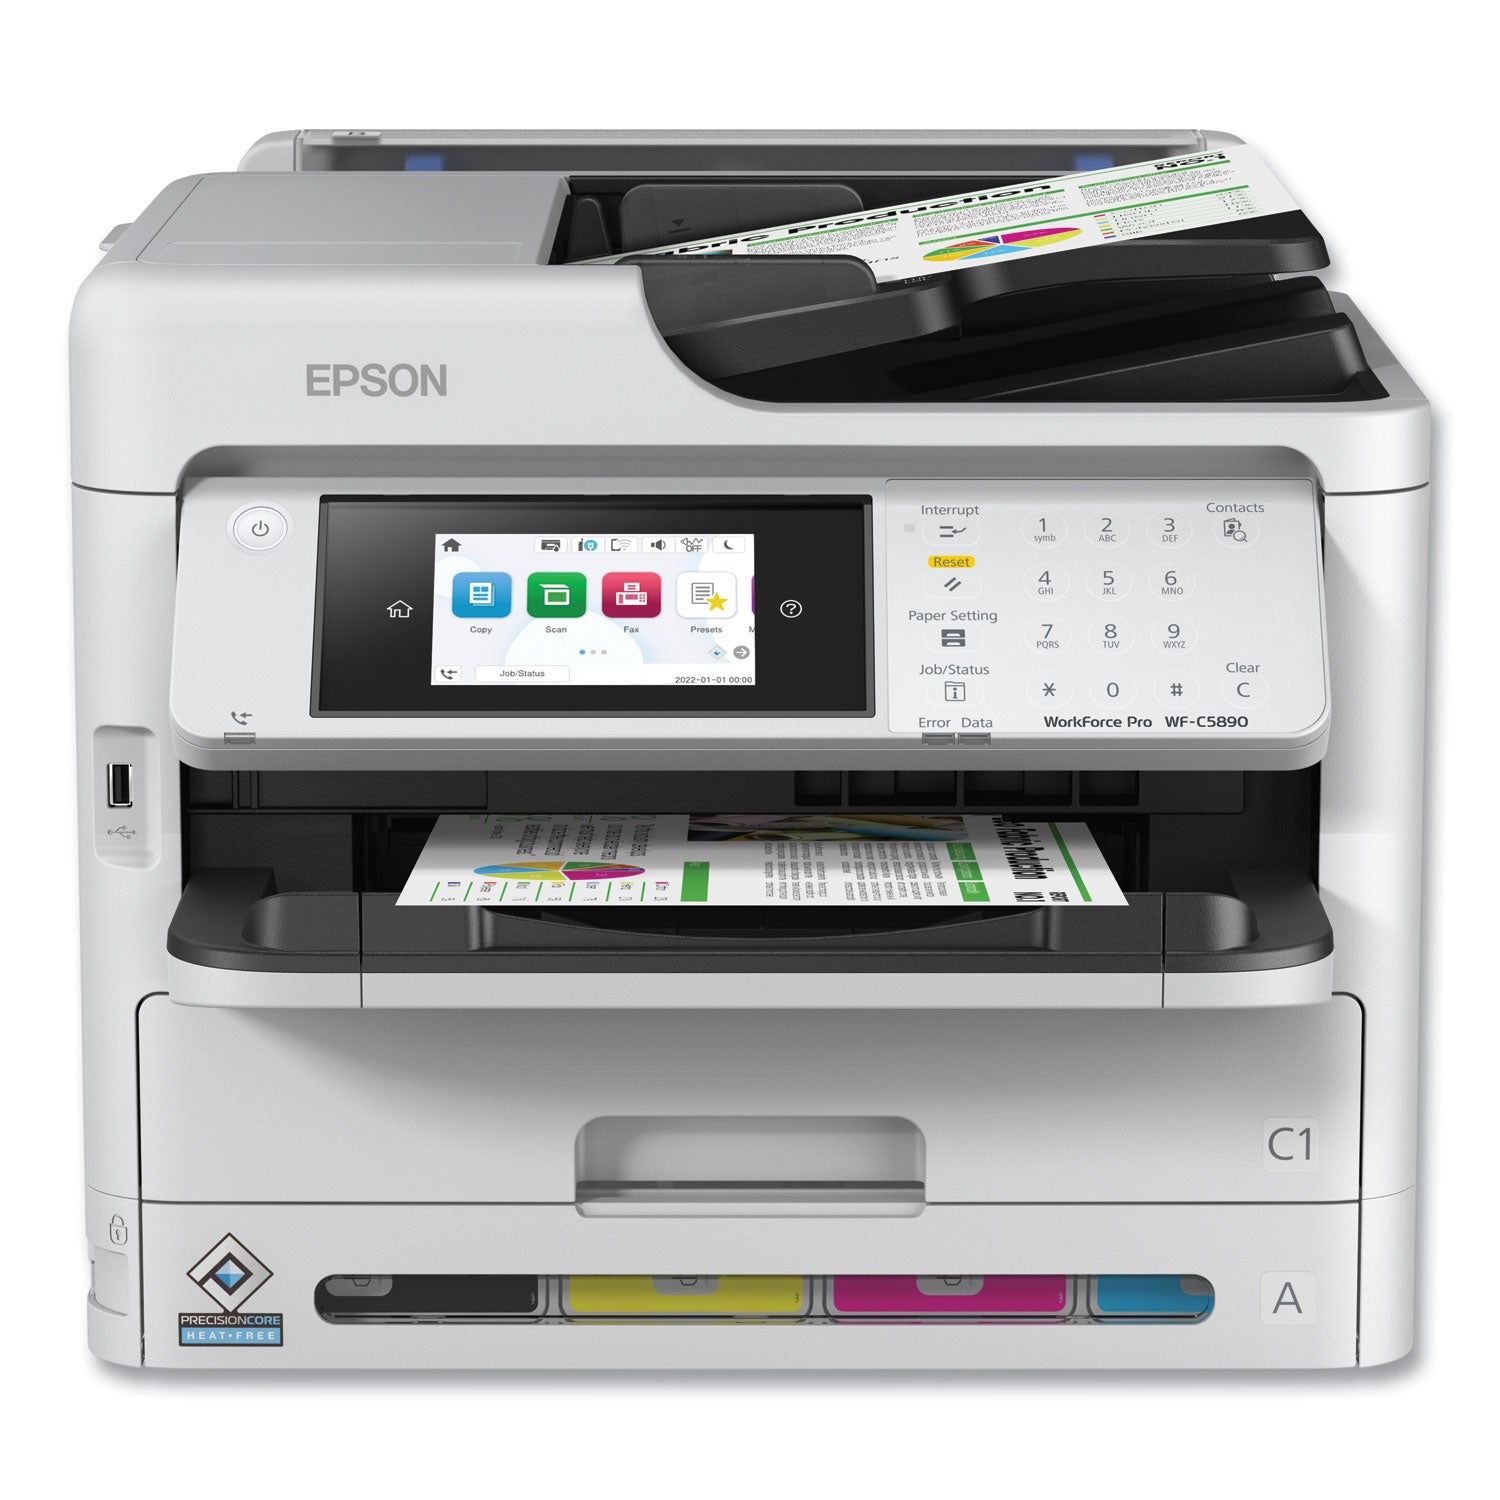 workforce-pro-wf-c5890-multifunction-printer-copy-fax-print-scan_epsc11ck23201 - 1